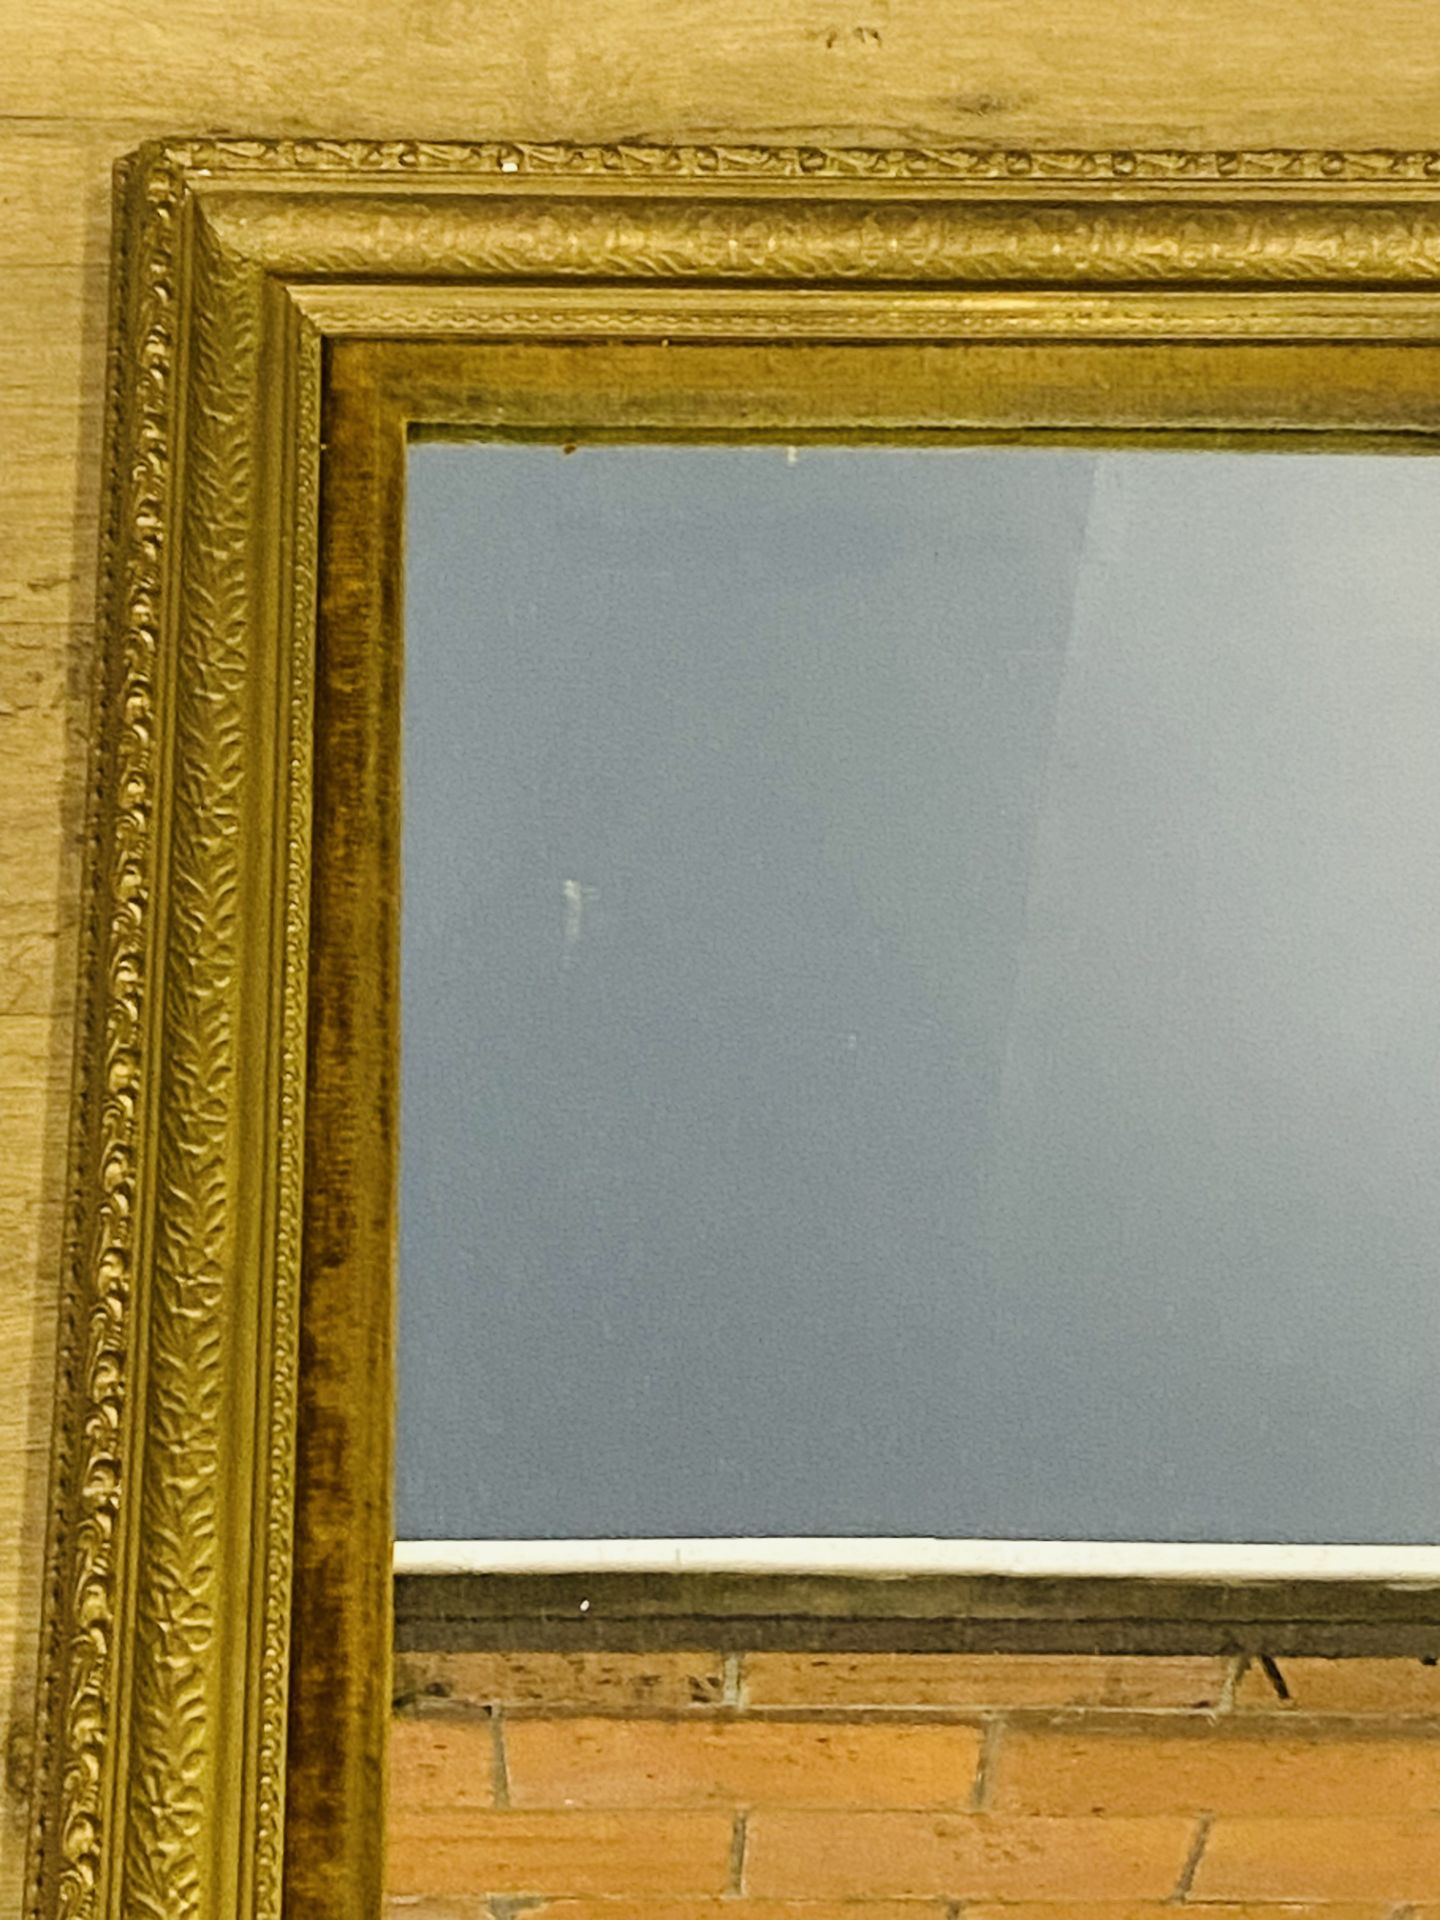 Gilt framed mirror - Image 4 of 4